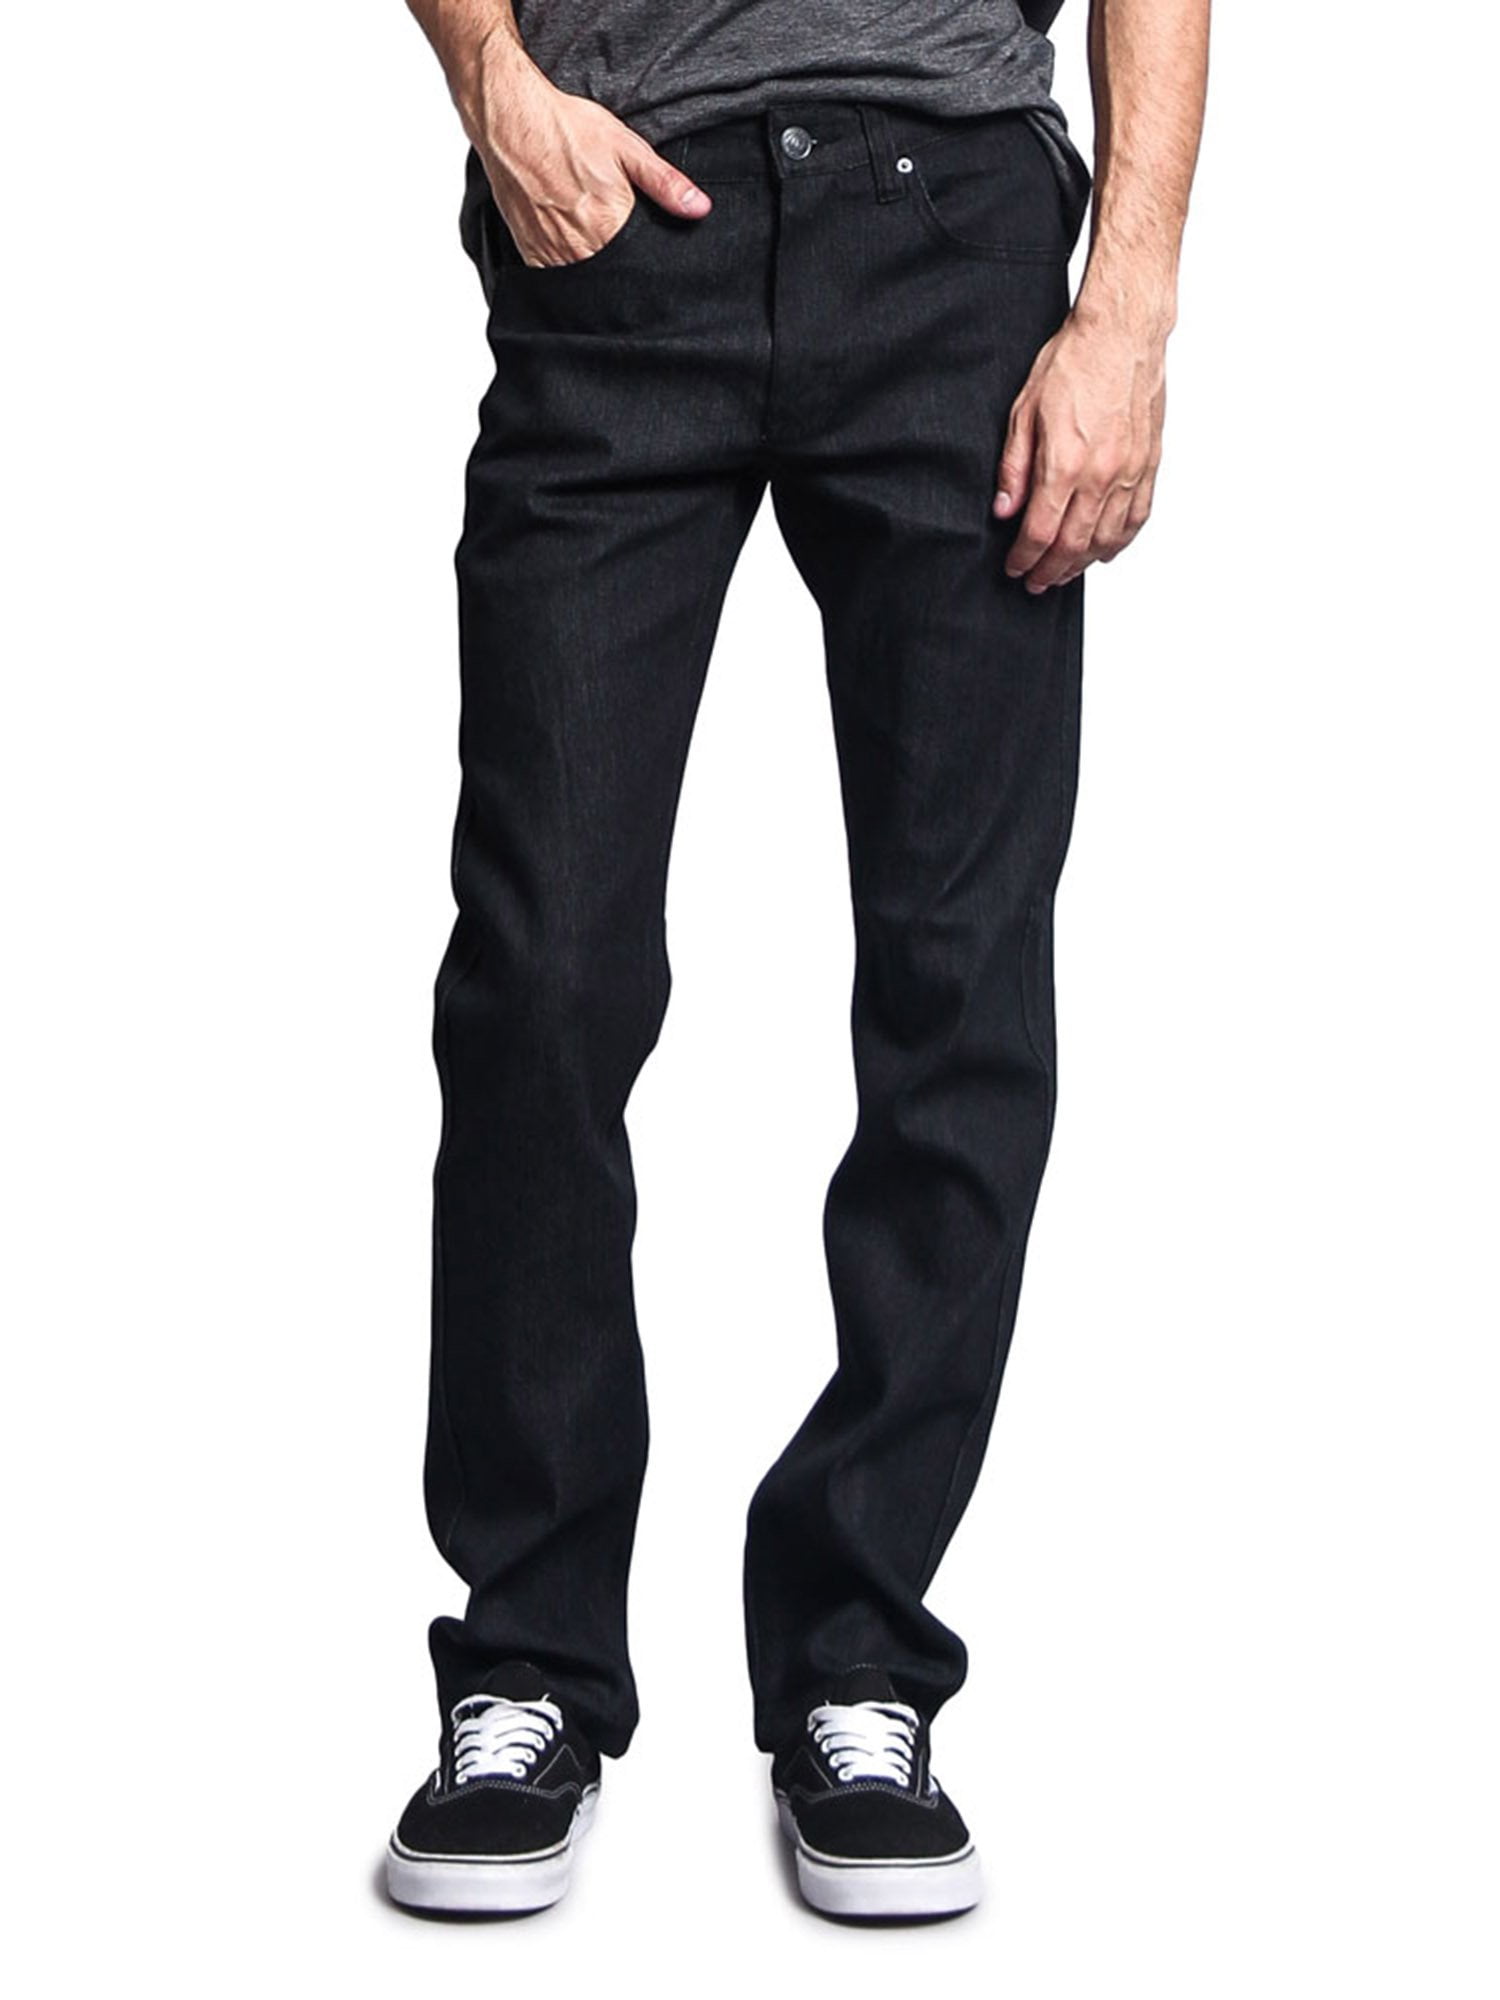 Victorious Men's Slim Fit Unwashed Raw Denim Jeans DL980 - Black - 38/30 -  Walmart.com